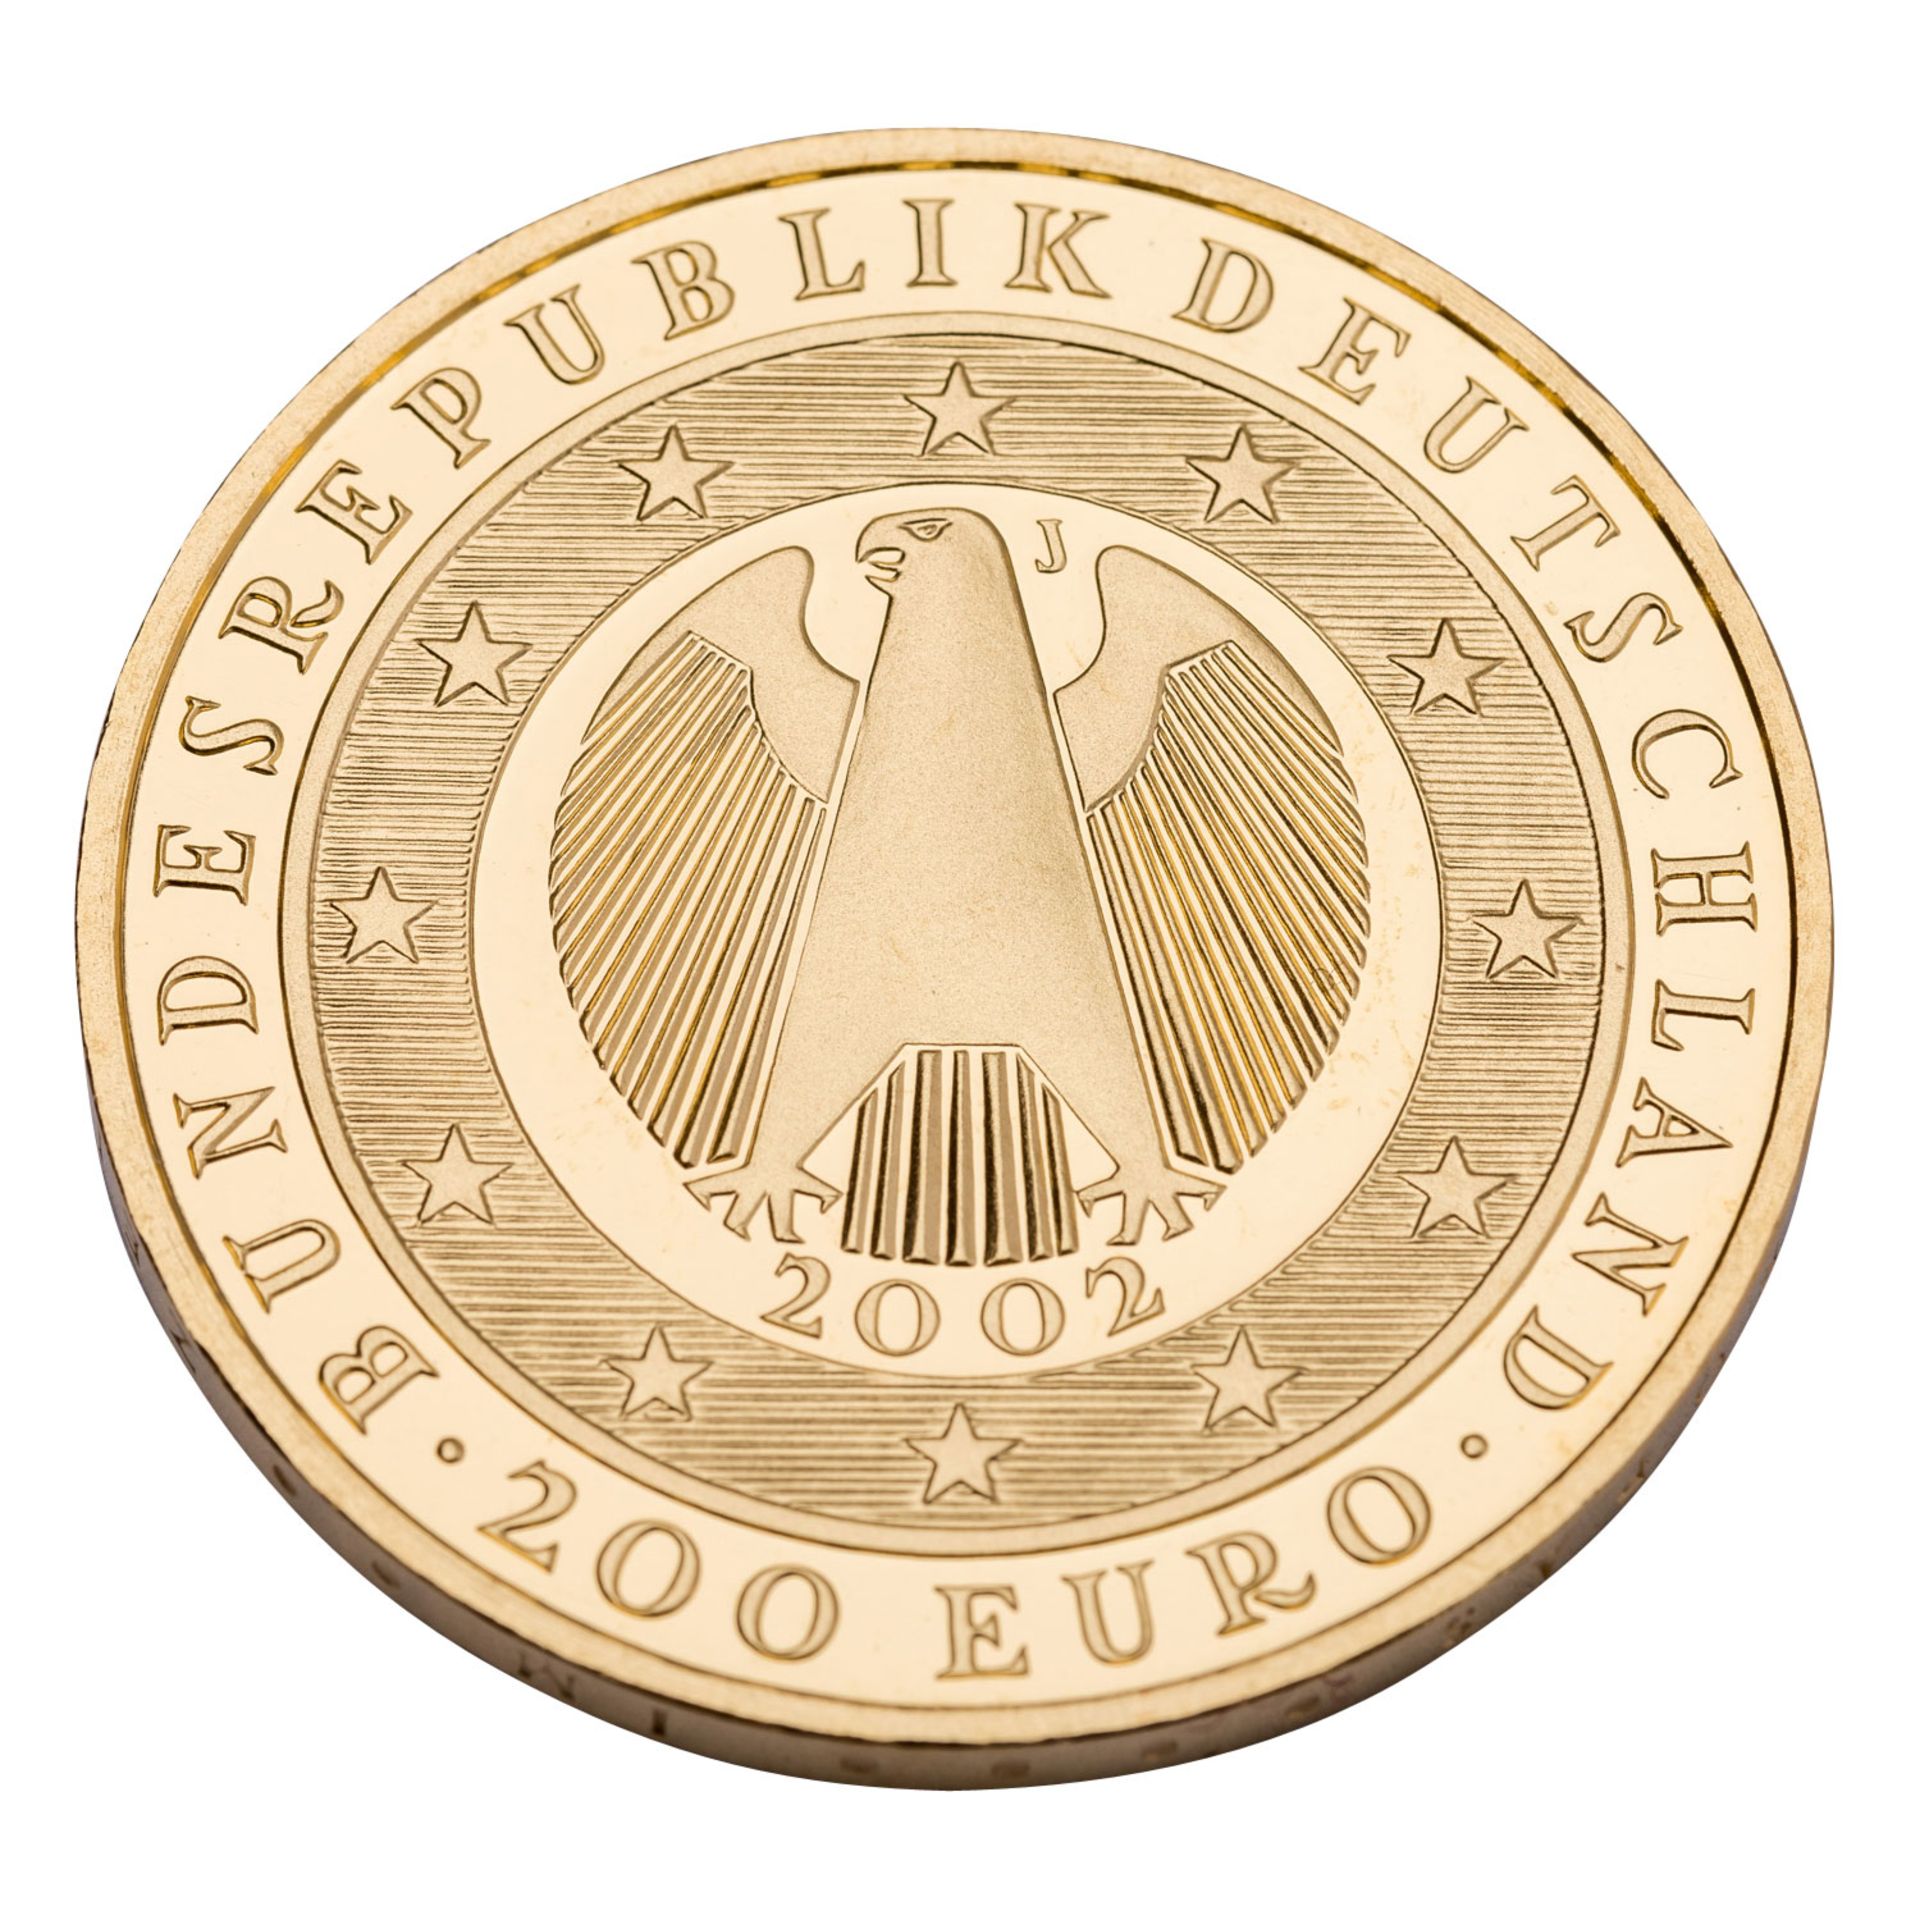 BRD - 200 Euro 2002/J, Währungsunion, GOLD,  - Bild 2 aus 3